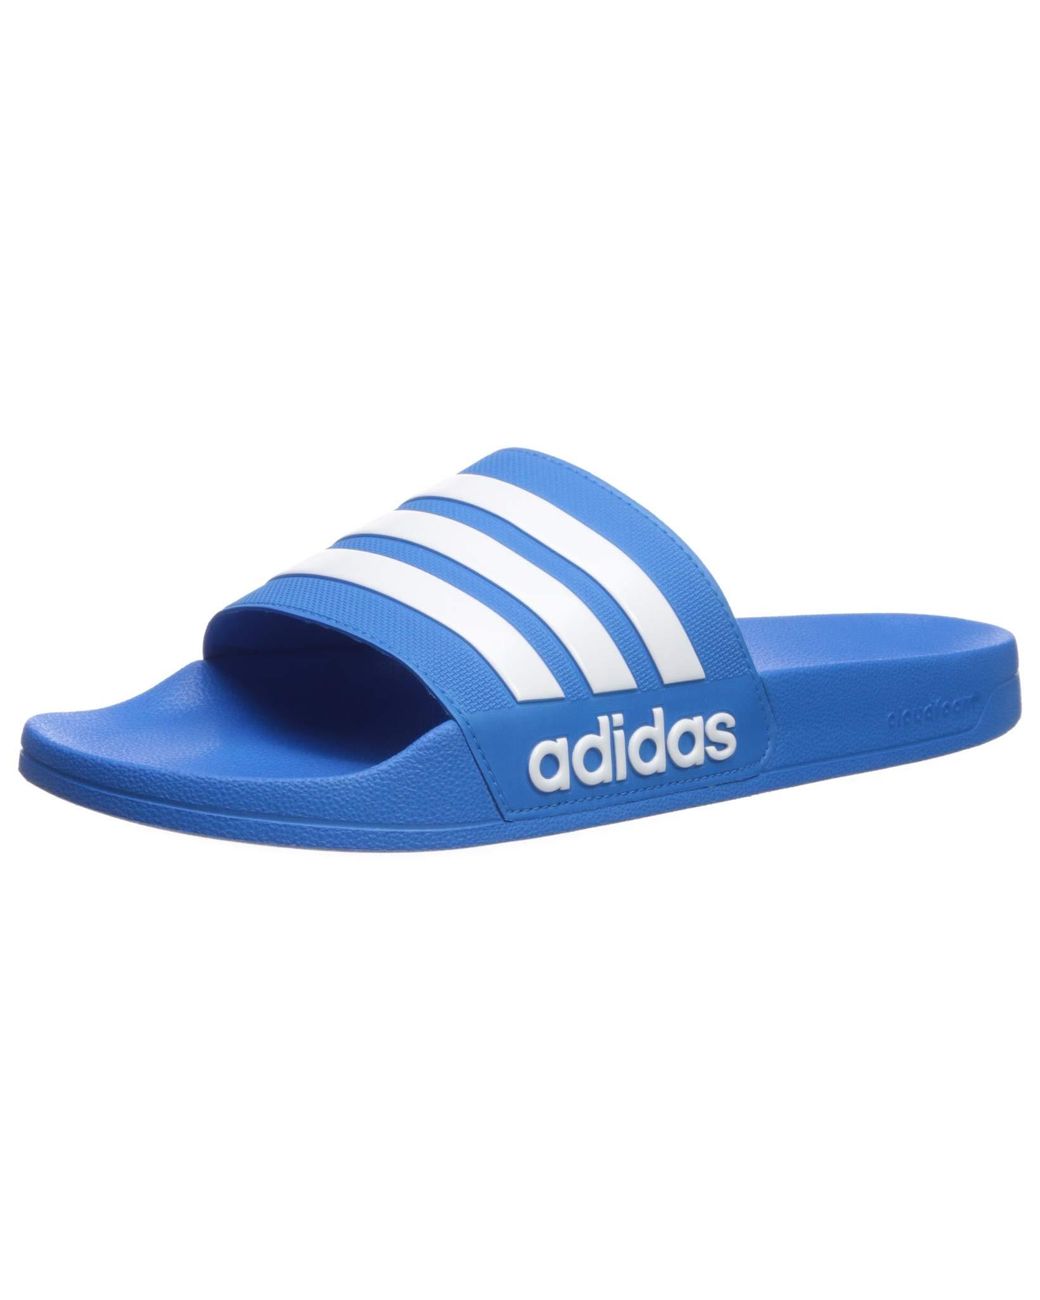 adidas sandal blue